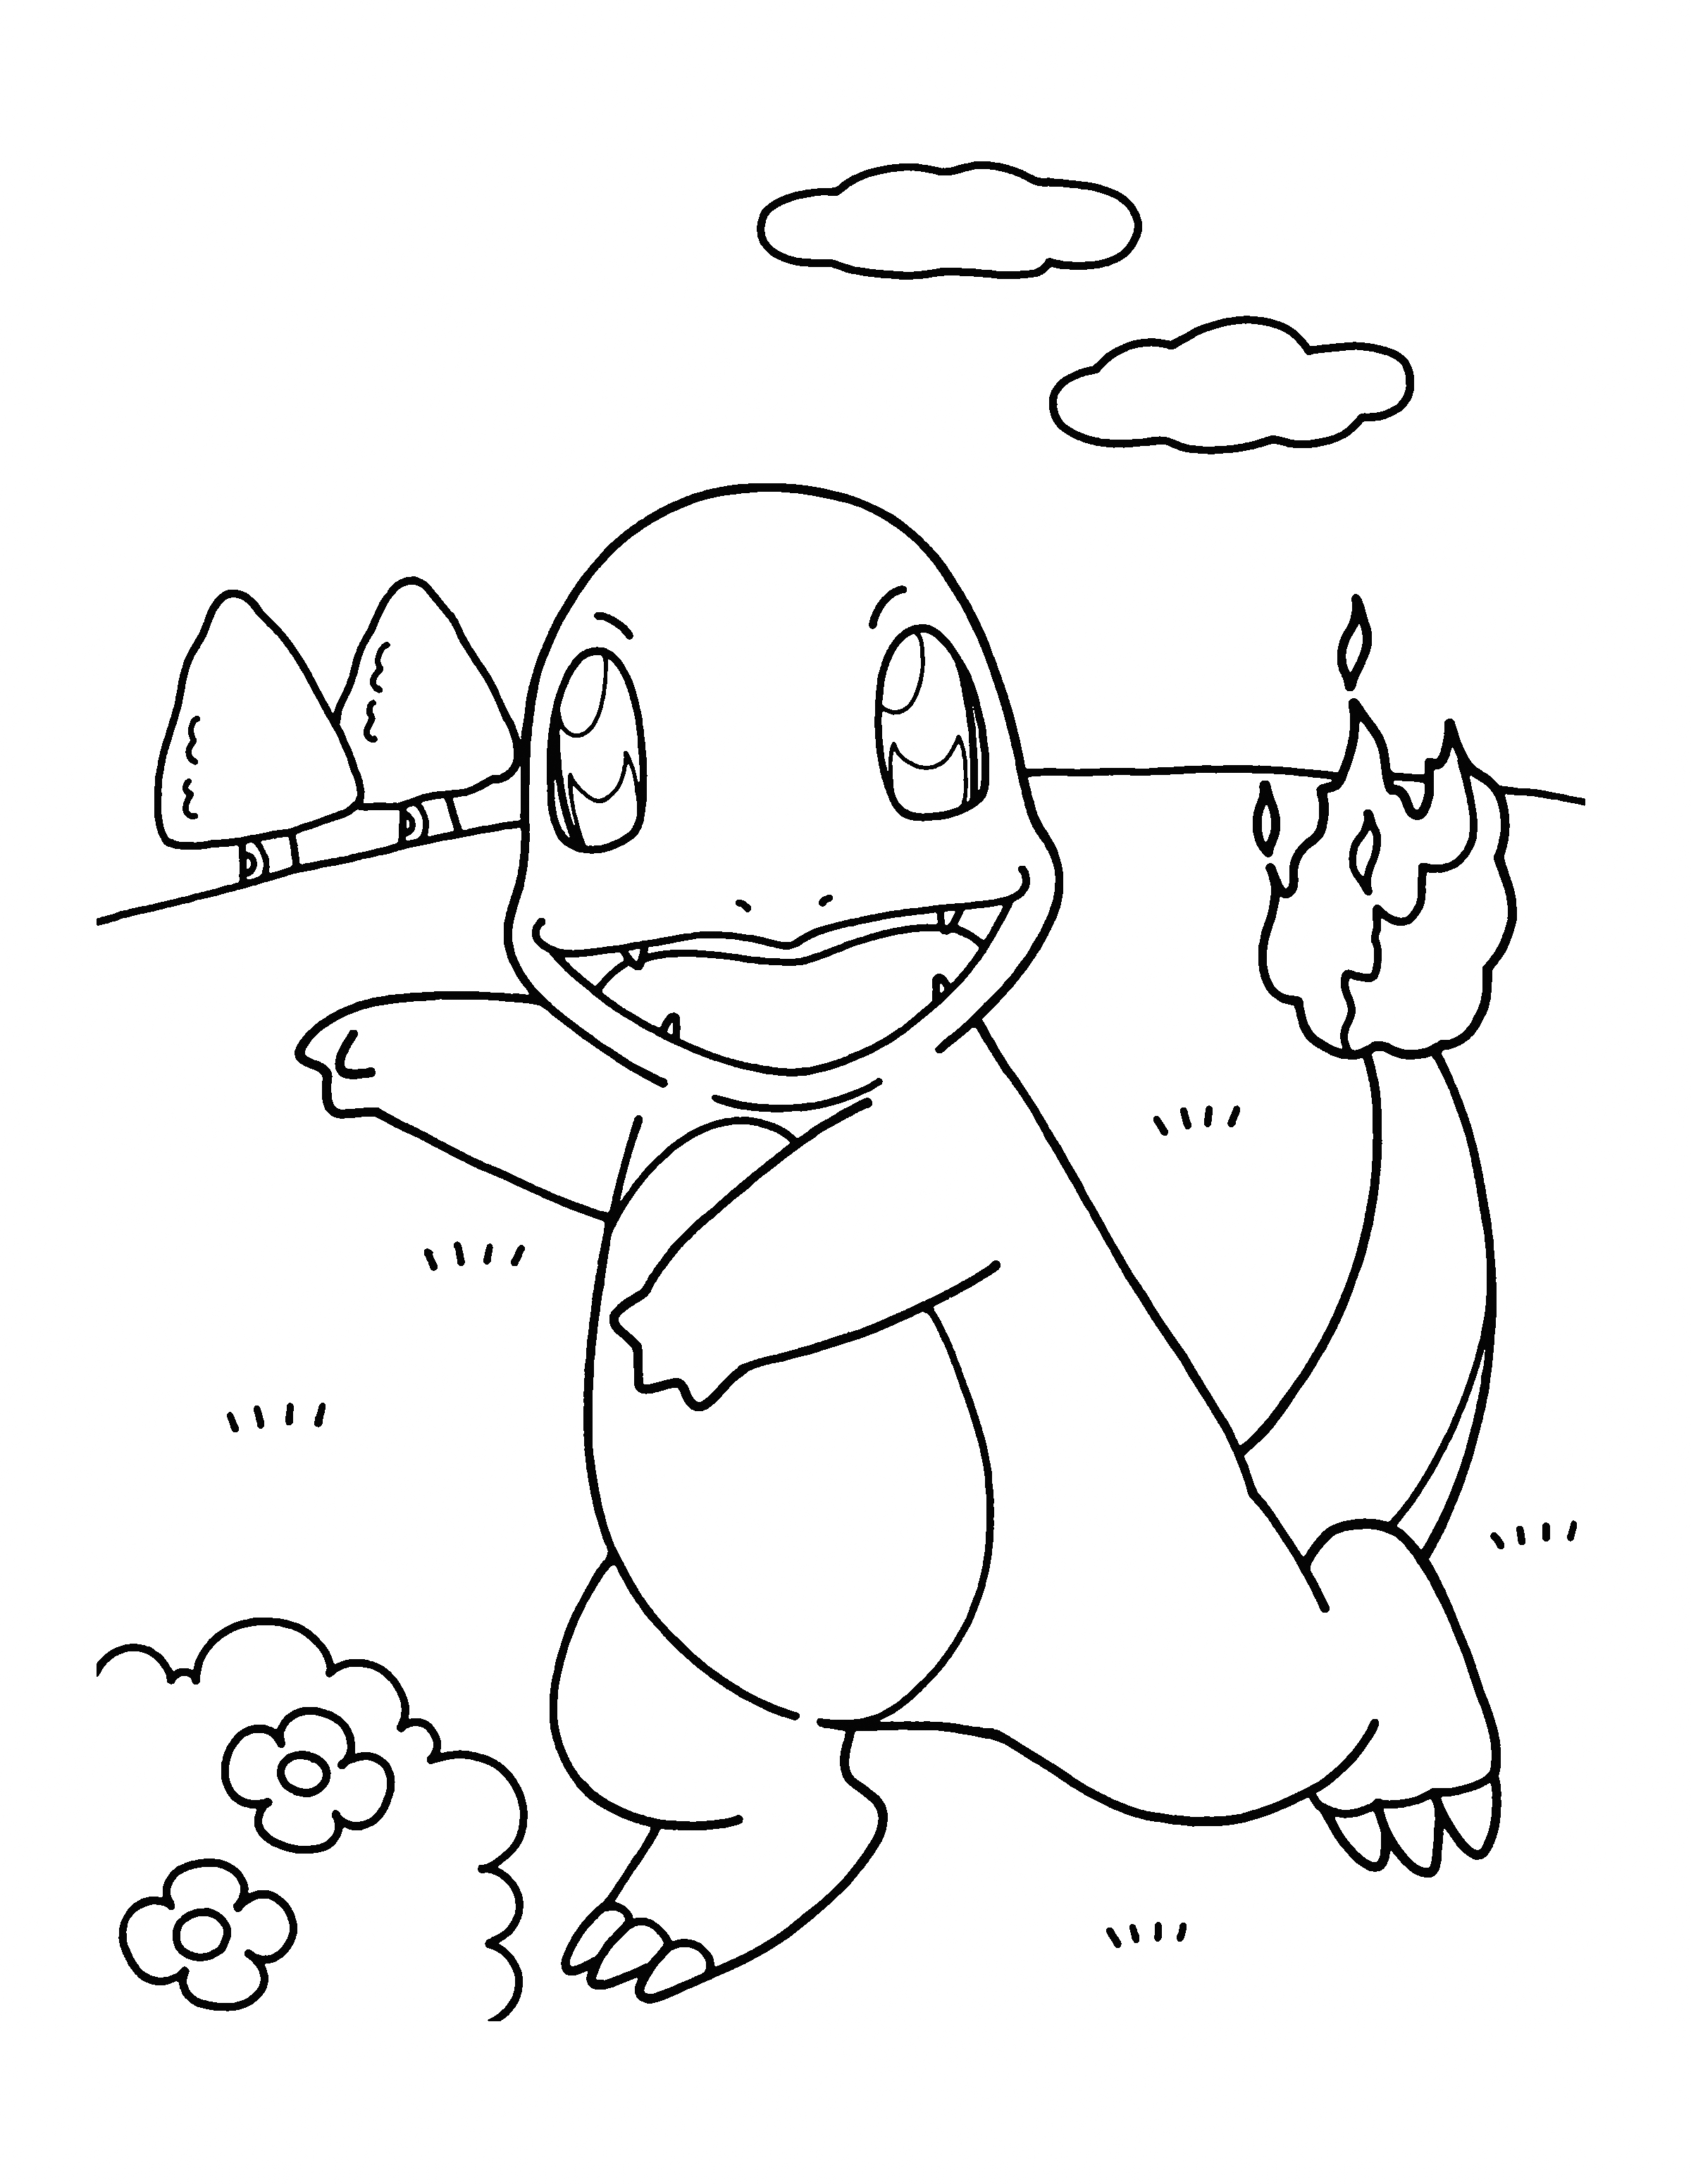 Charmander Pokemon coloring page